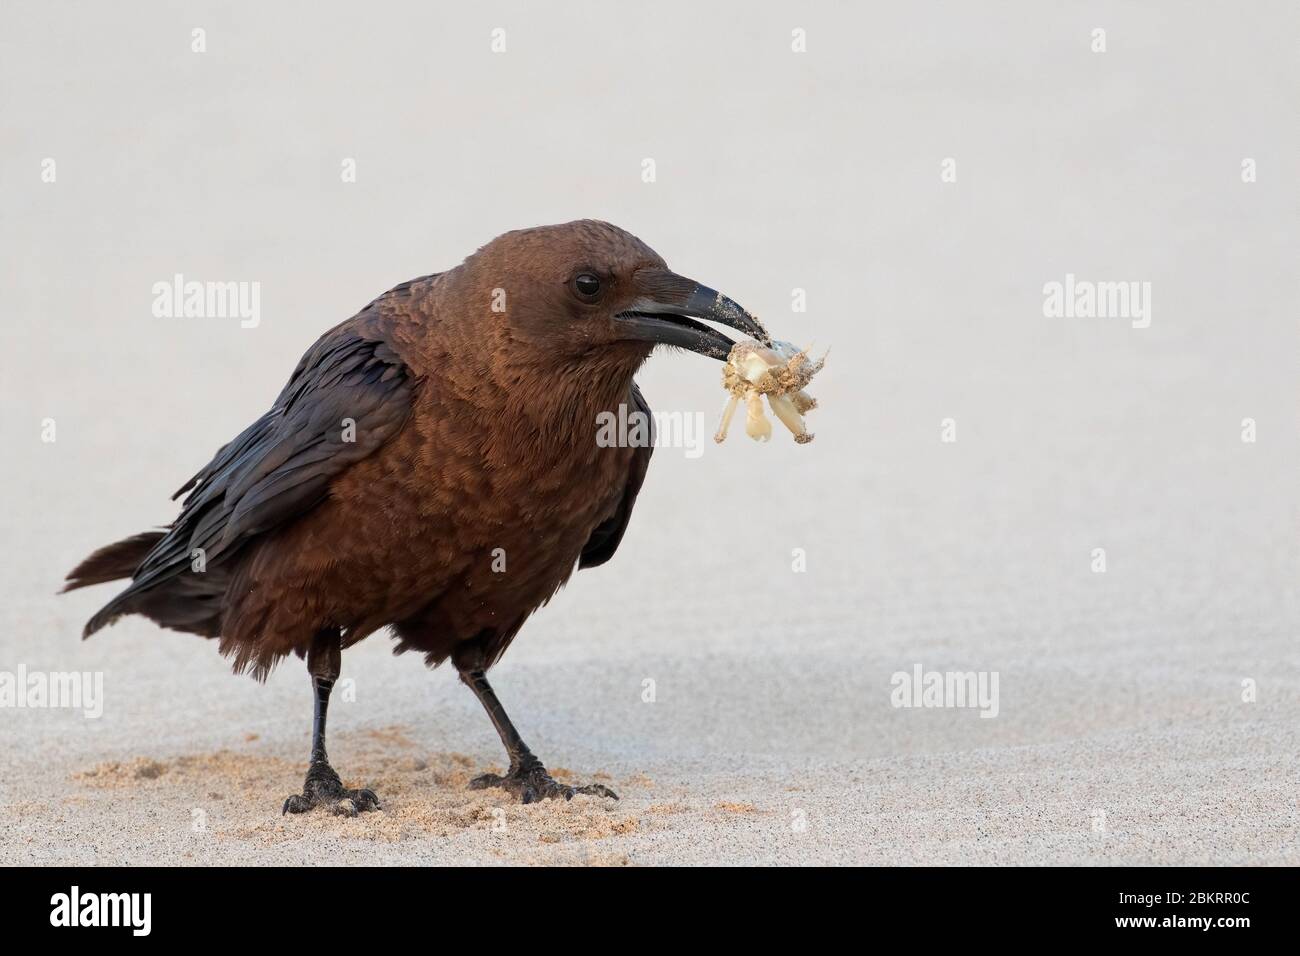 Brown-necked raven (Corvus ruficollis) with caught crab in beak on sandy beach Stock Photo